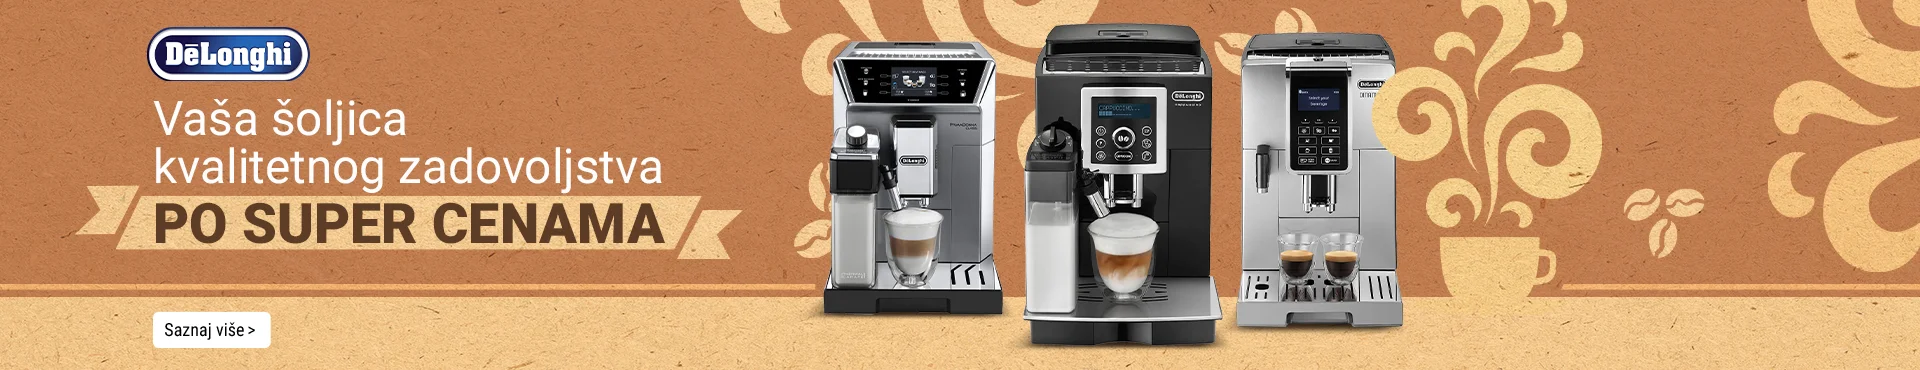 Snižene cene DeLonghi aparata za kafu